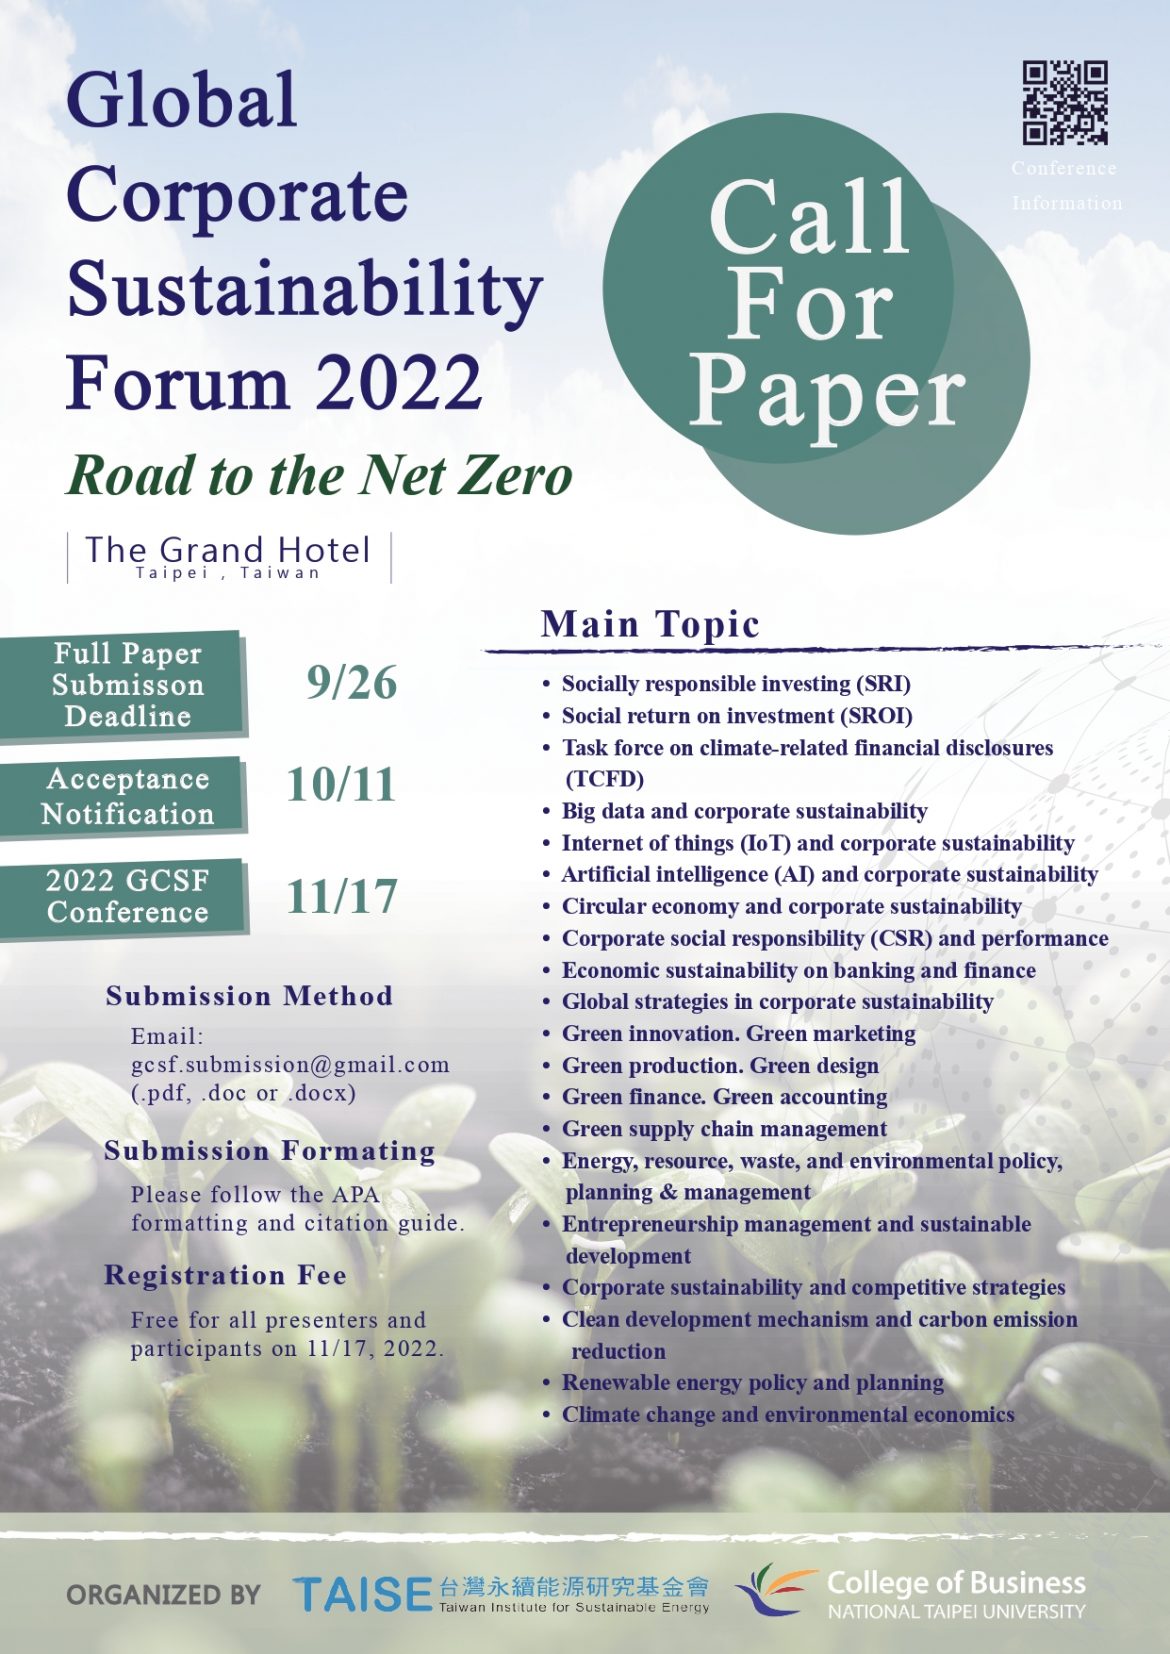 Global Corporate Sustainability Forum 2022